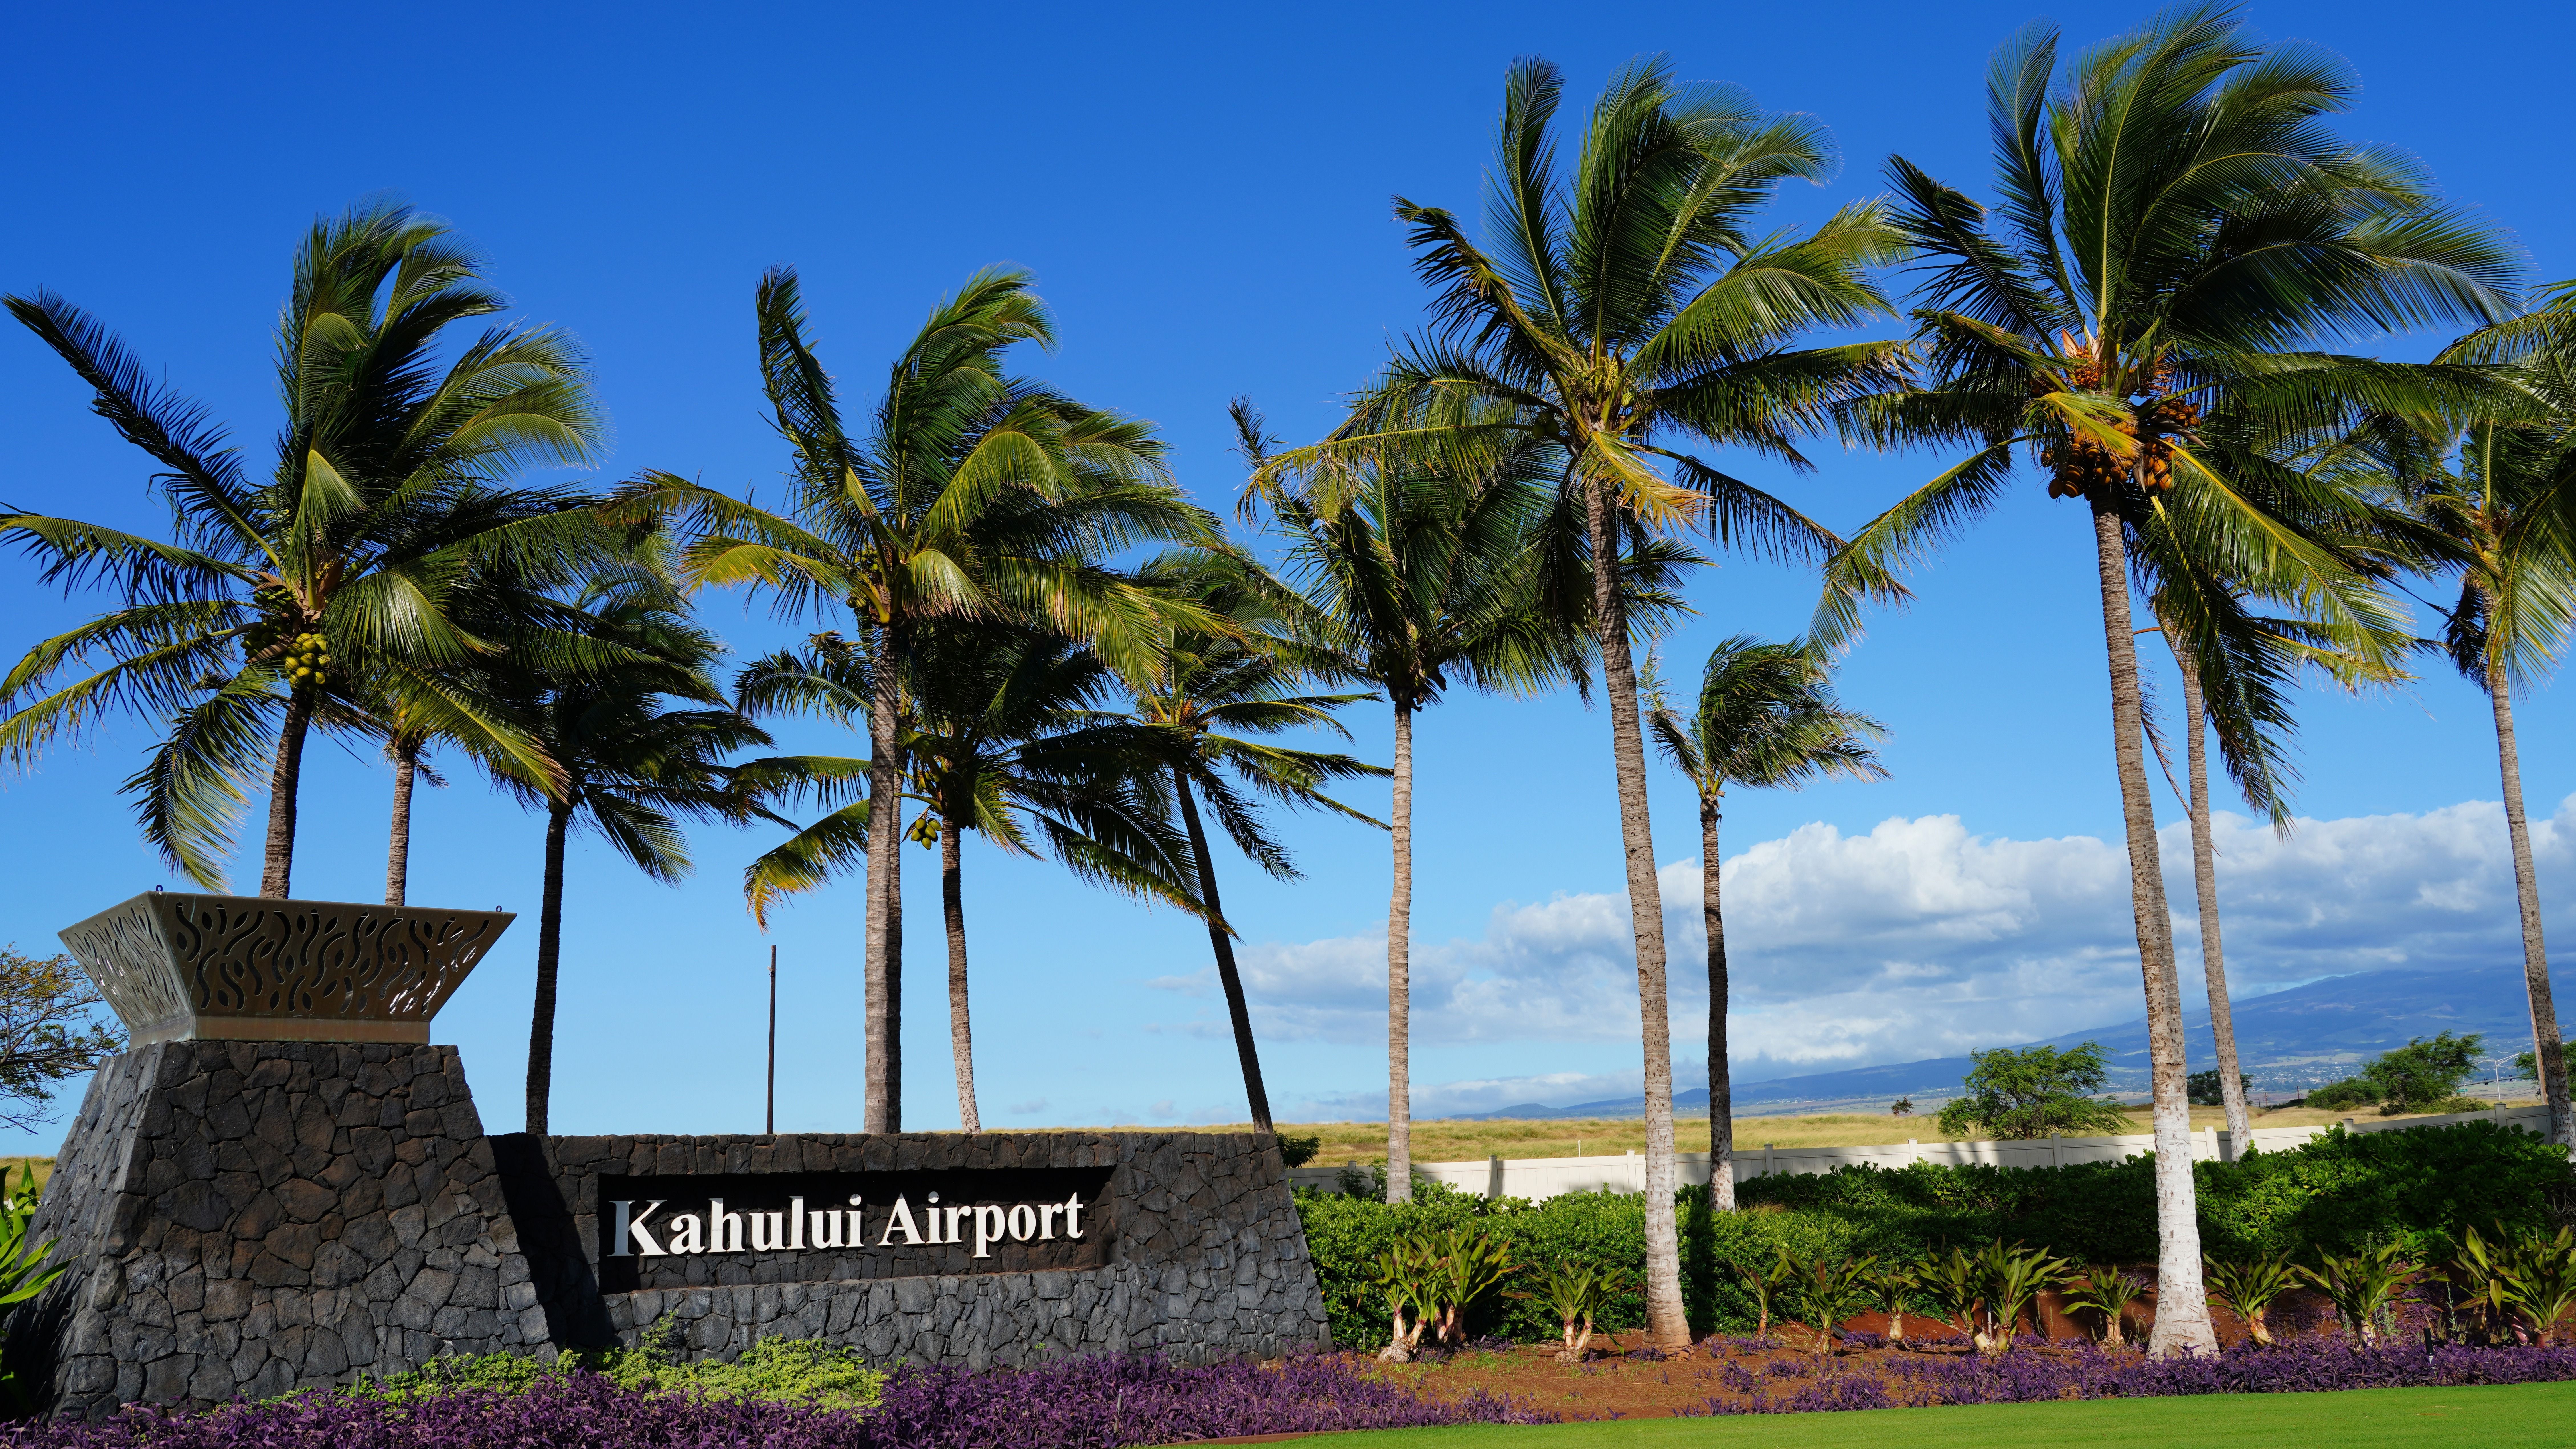 Kahului Airport in Maui